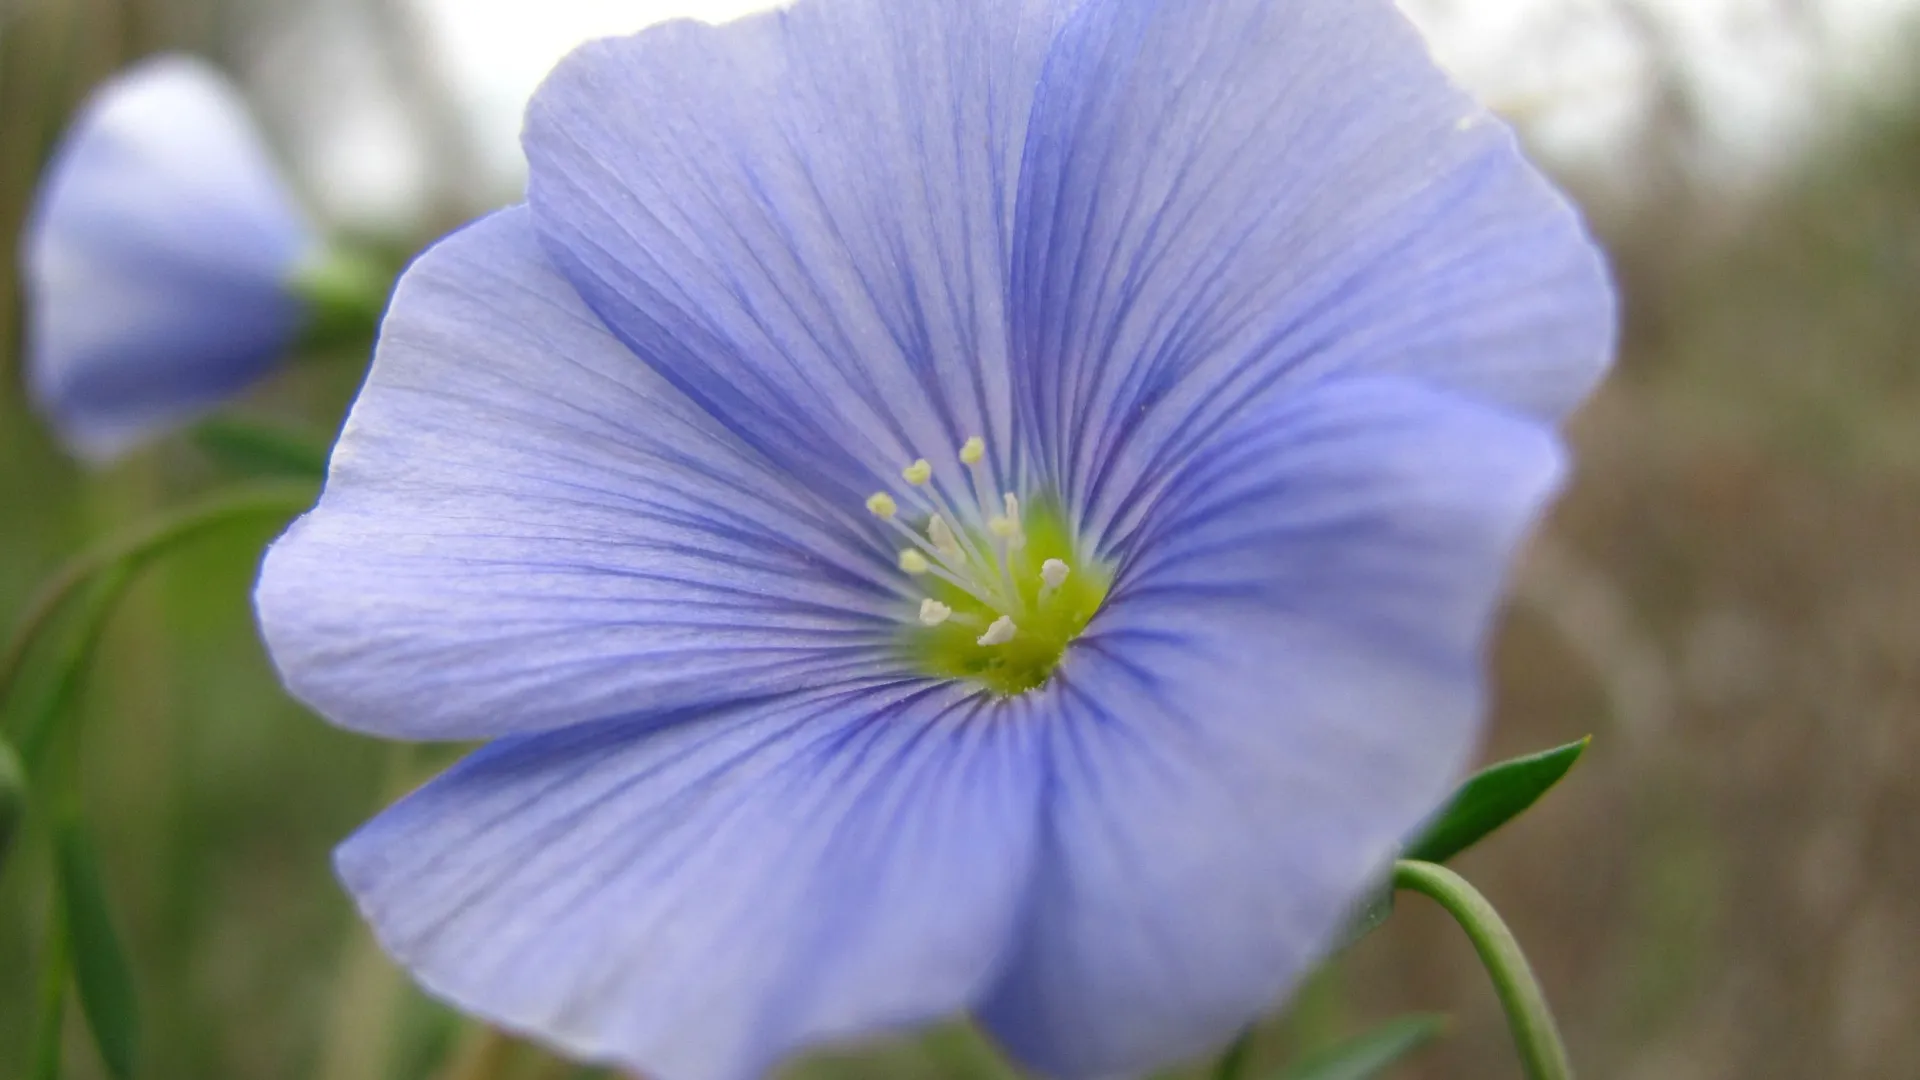 Голубые цветы — символ нежности и ранимости. Фото: Viktoriia Zolotarova / Shutterstock / Fotodom